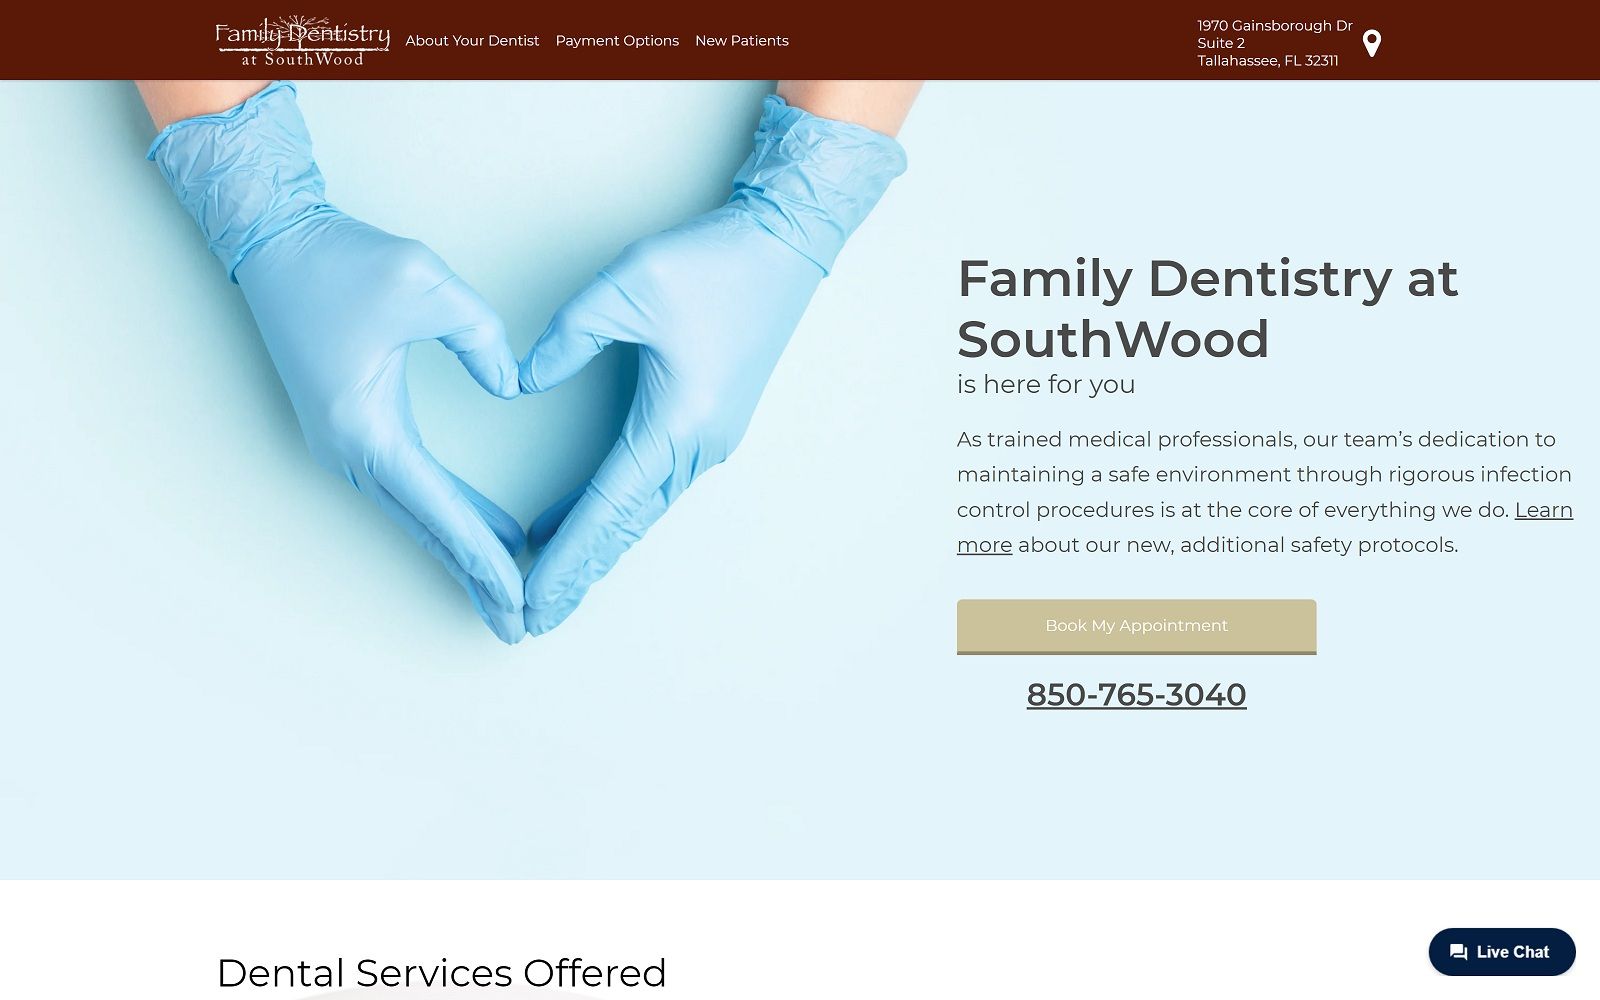 The screenshot of family dentistry at southwood familydentistryatsouthwood. Com website